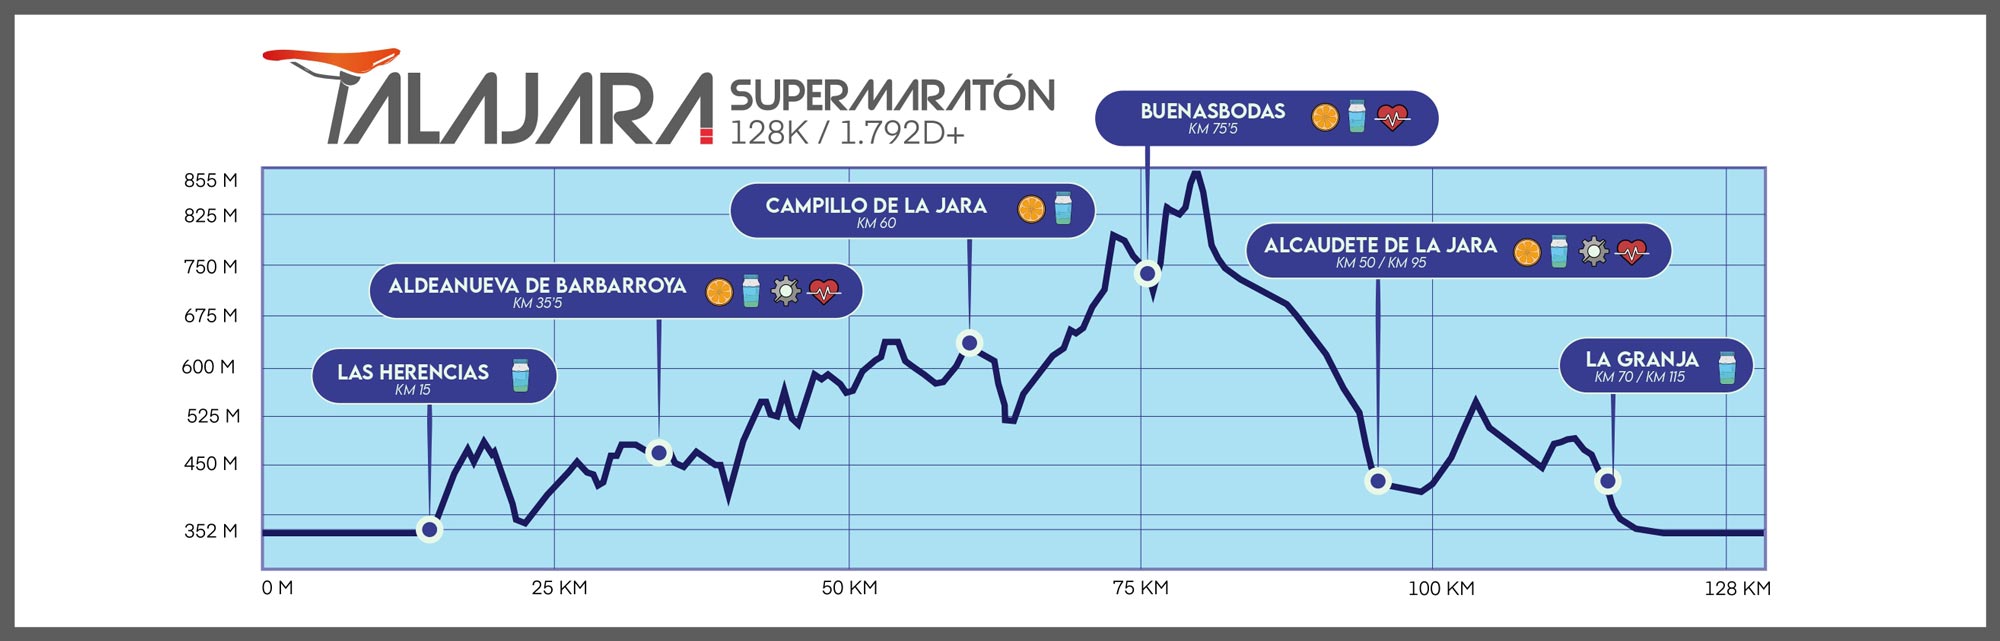 Perfil Supermaratón